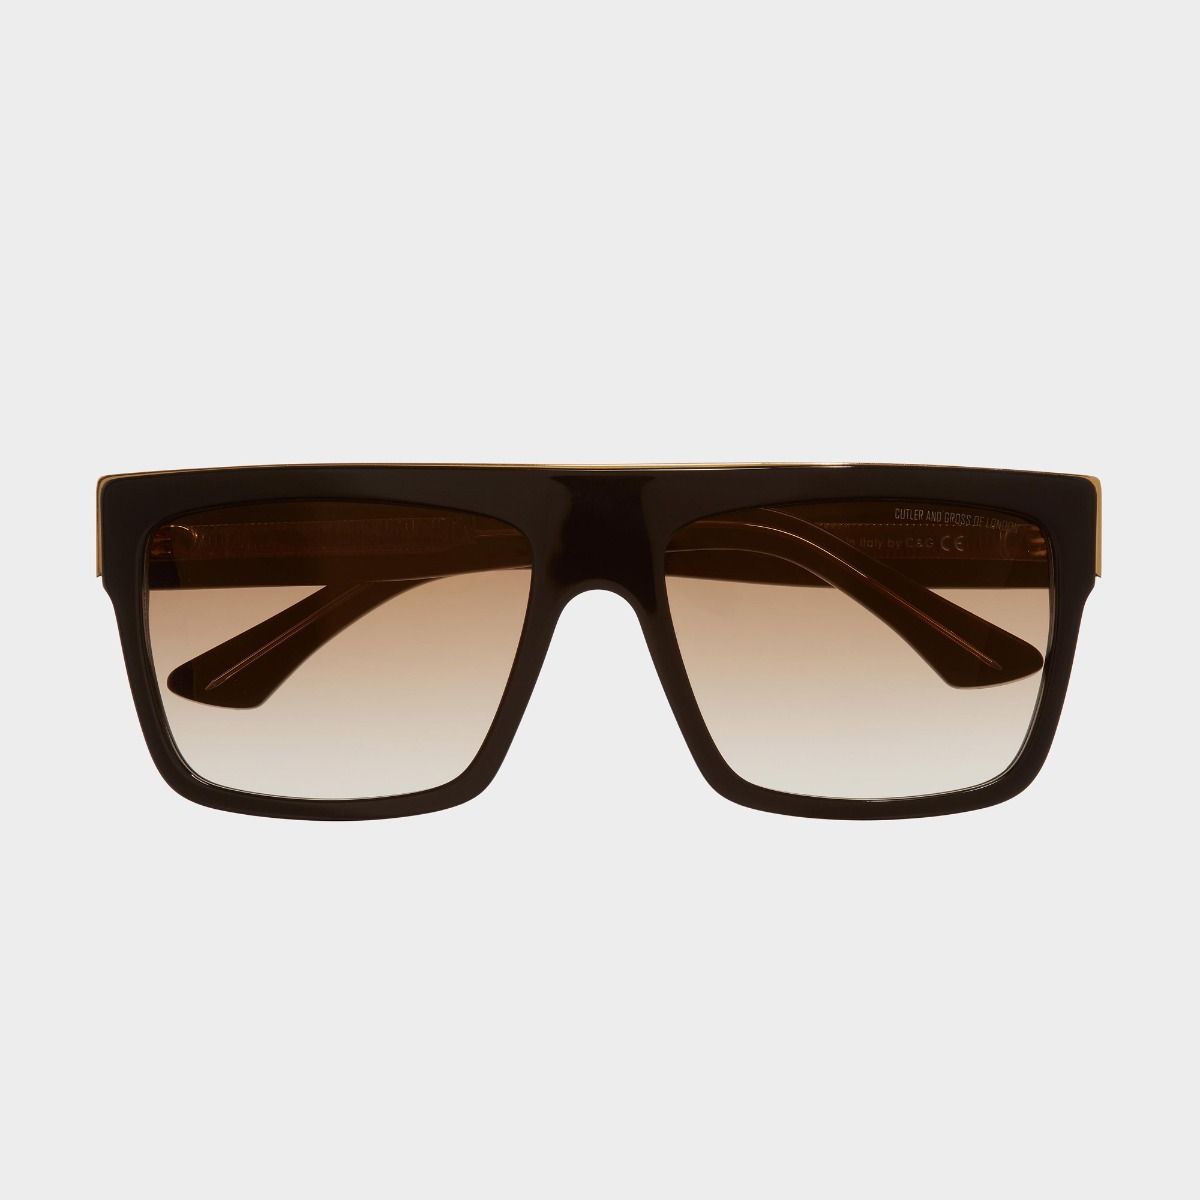 1354 D-Frame Sunglasses